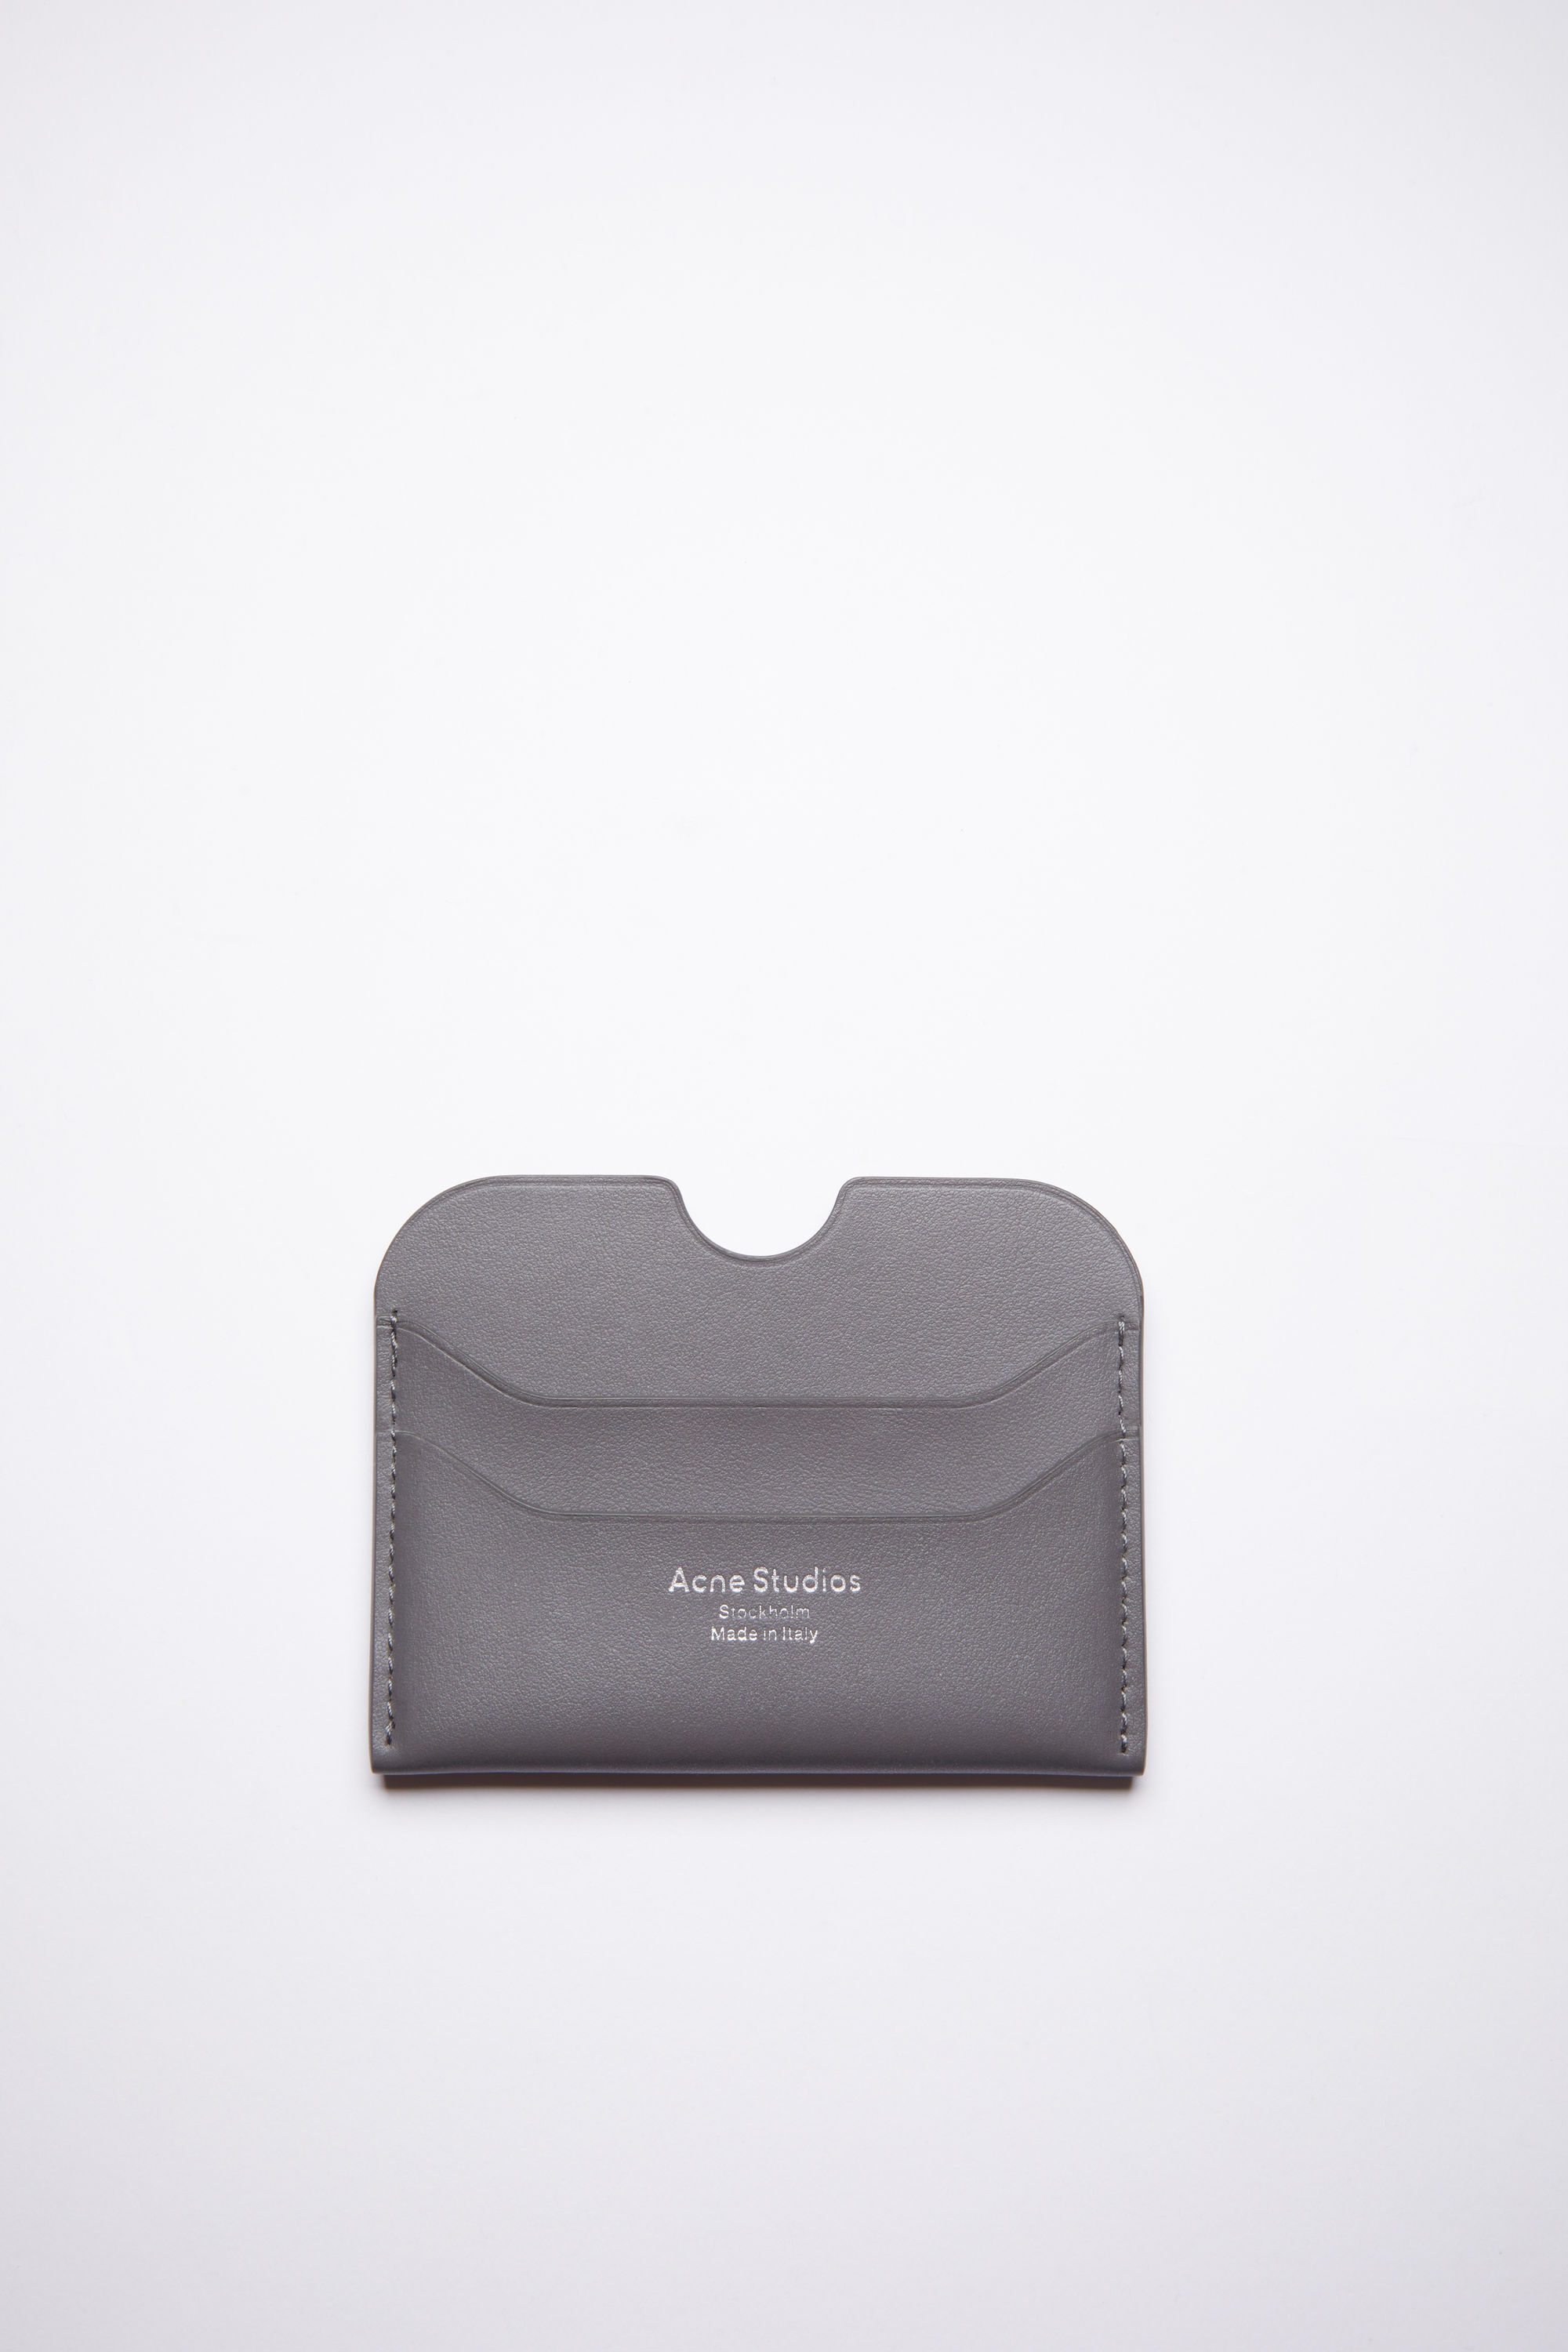 Acne Studios - Card holder - Dark grey